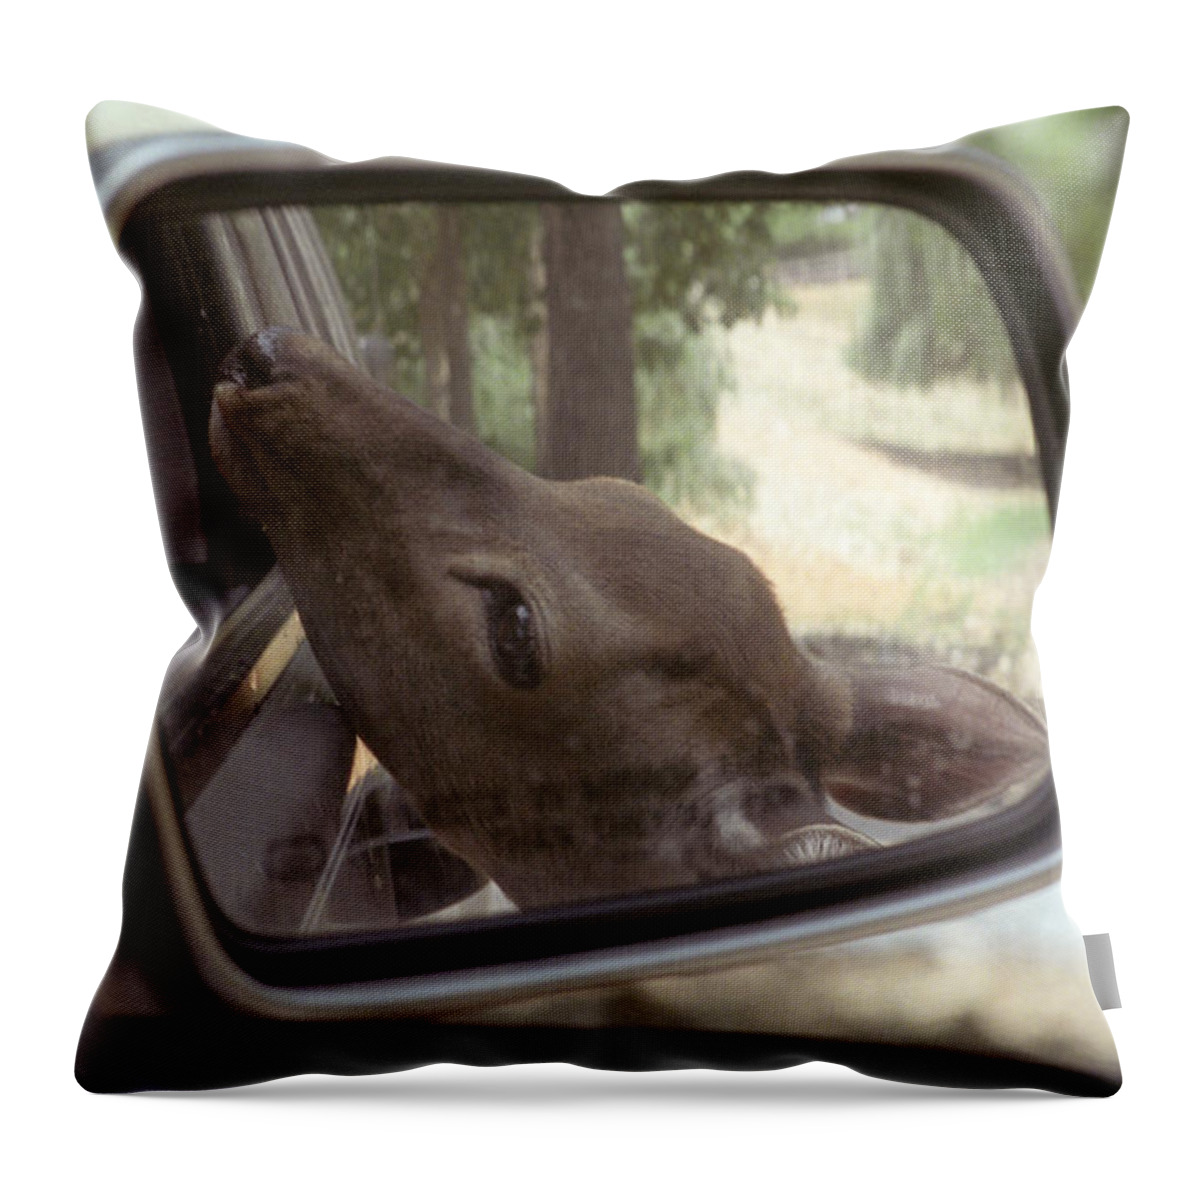 Deer Throw Pillow featuring the photograph Reflections of a Deer by Wanda Brandon